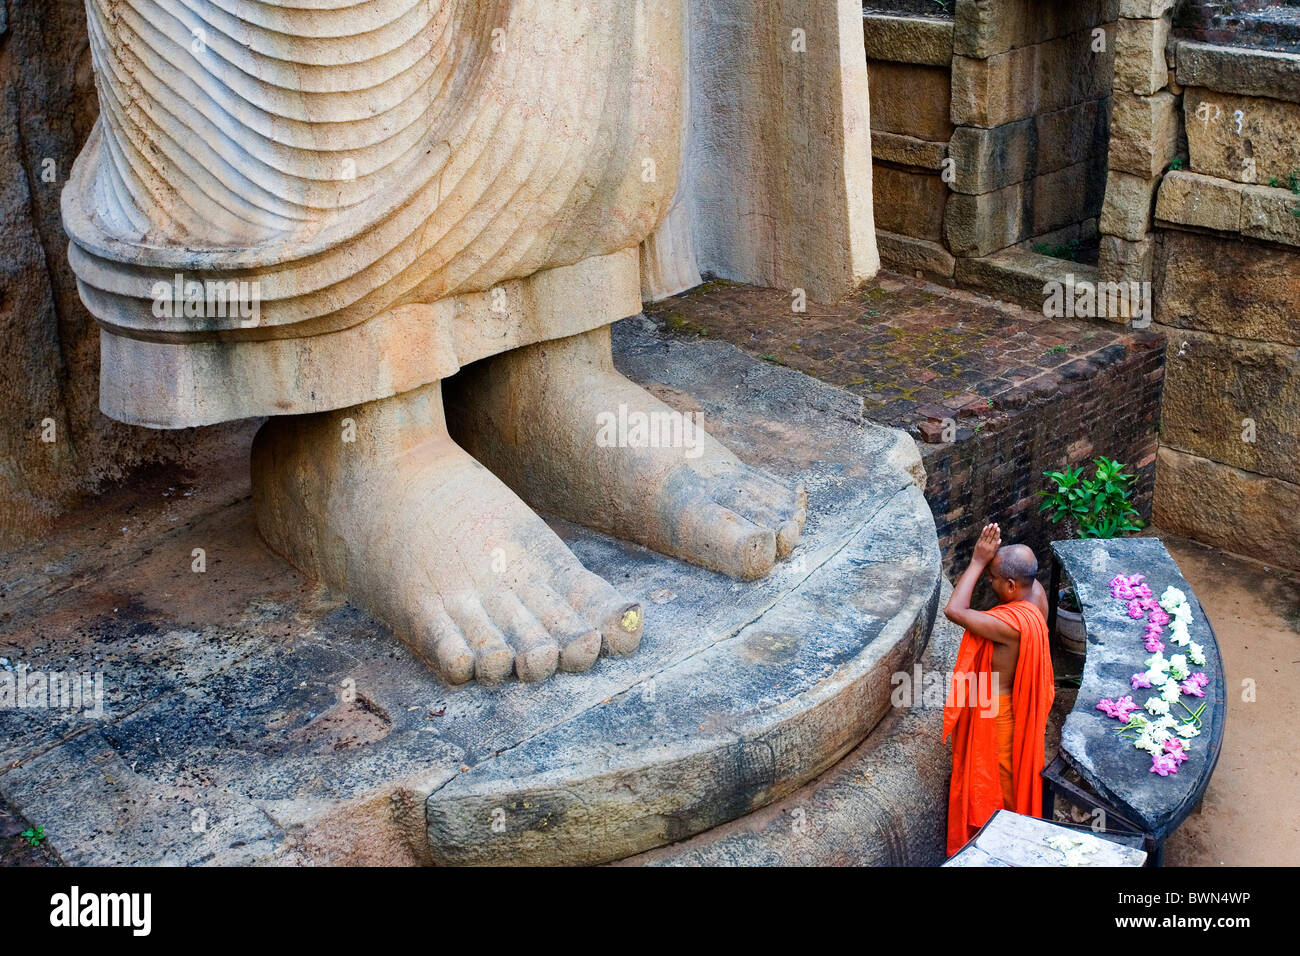 Sri Lanka Asien Aukana Buddha-Statue Skulptur Buddhismus Kultur Geschichte historisch Rock Monch Mann Religion A Stockfoto